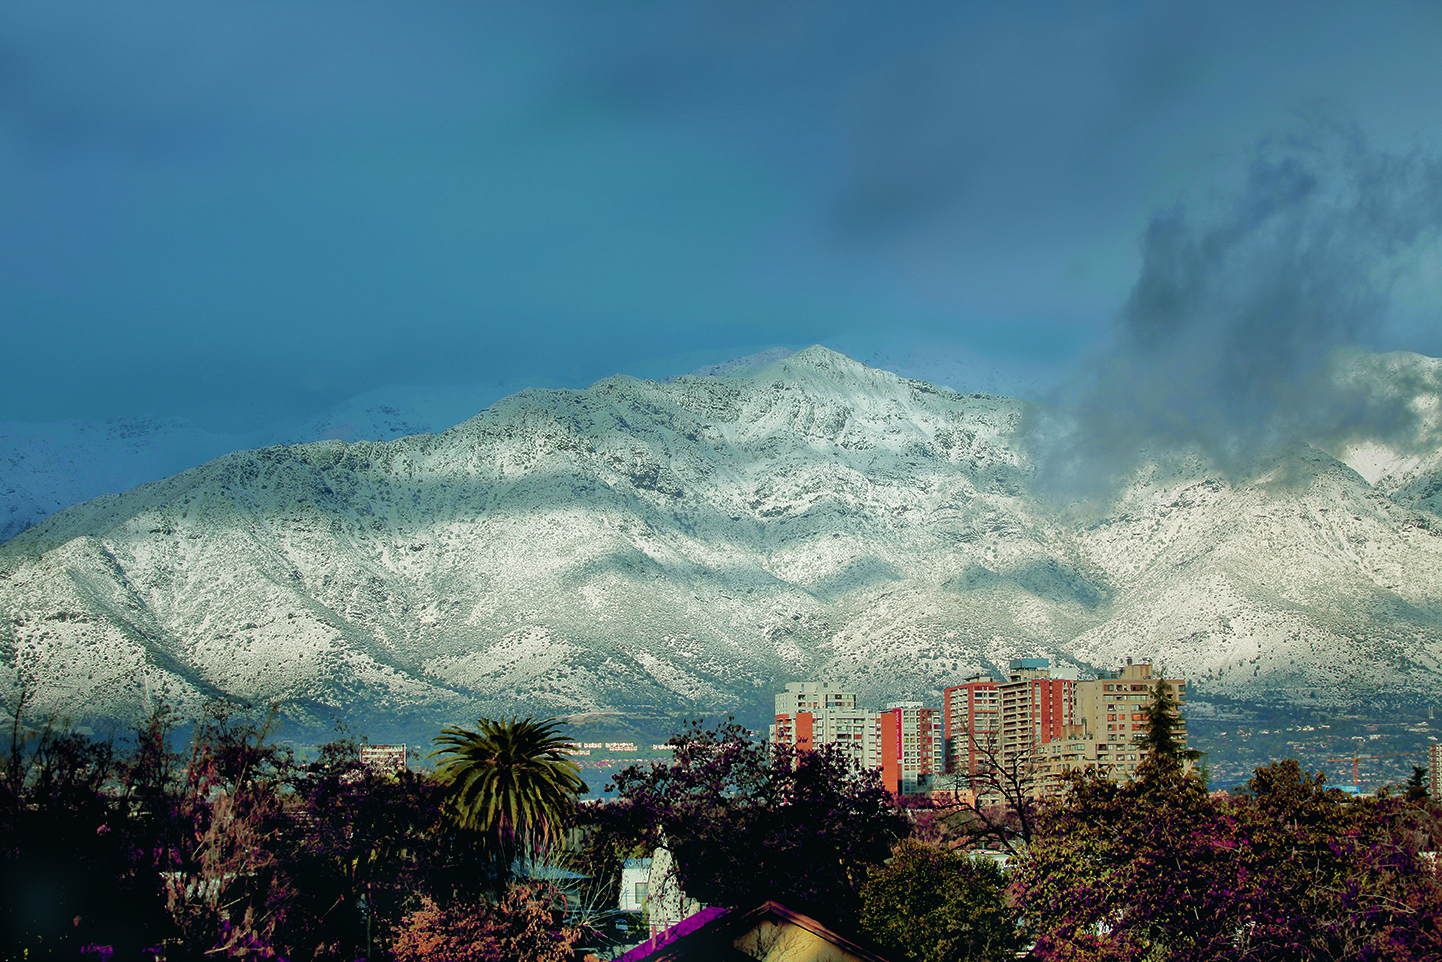 Santiago, Chile. Photo by Cristóbal Palma, from Boragó